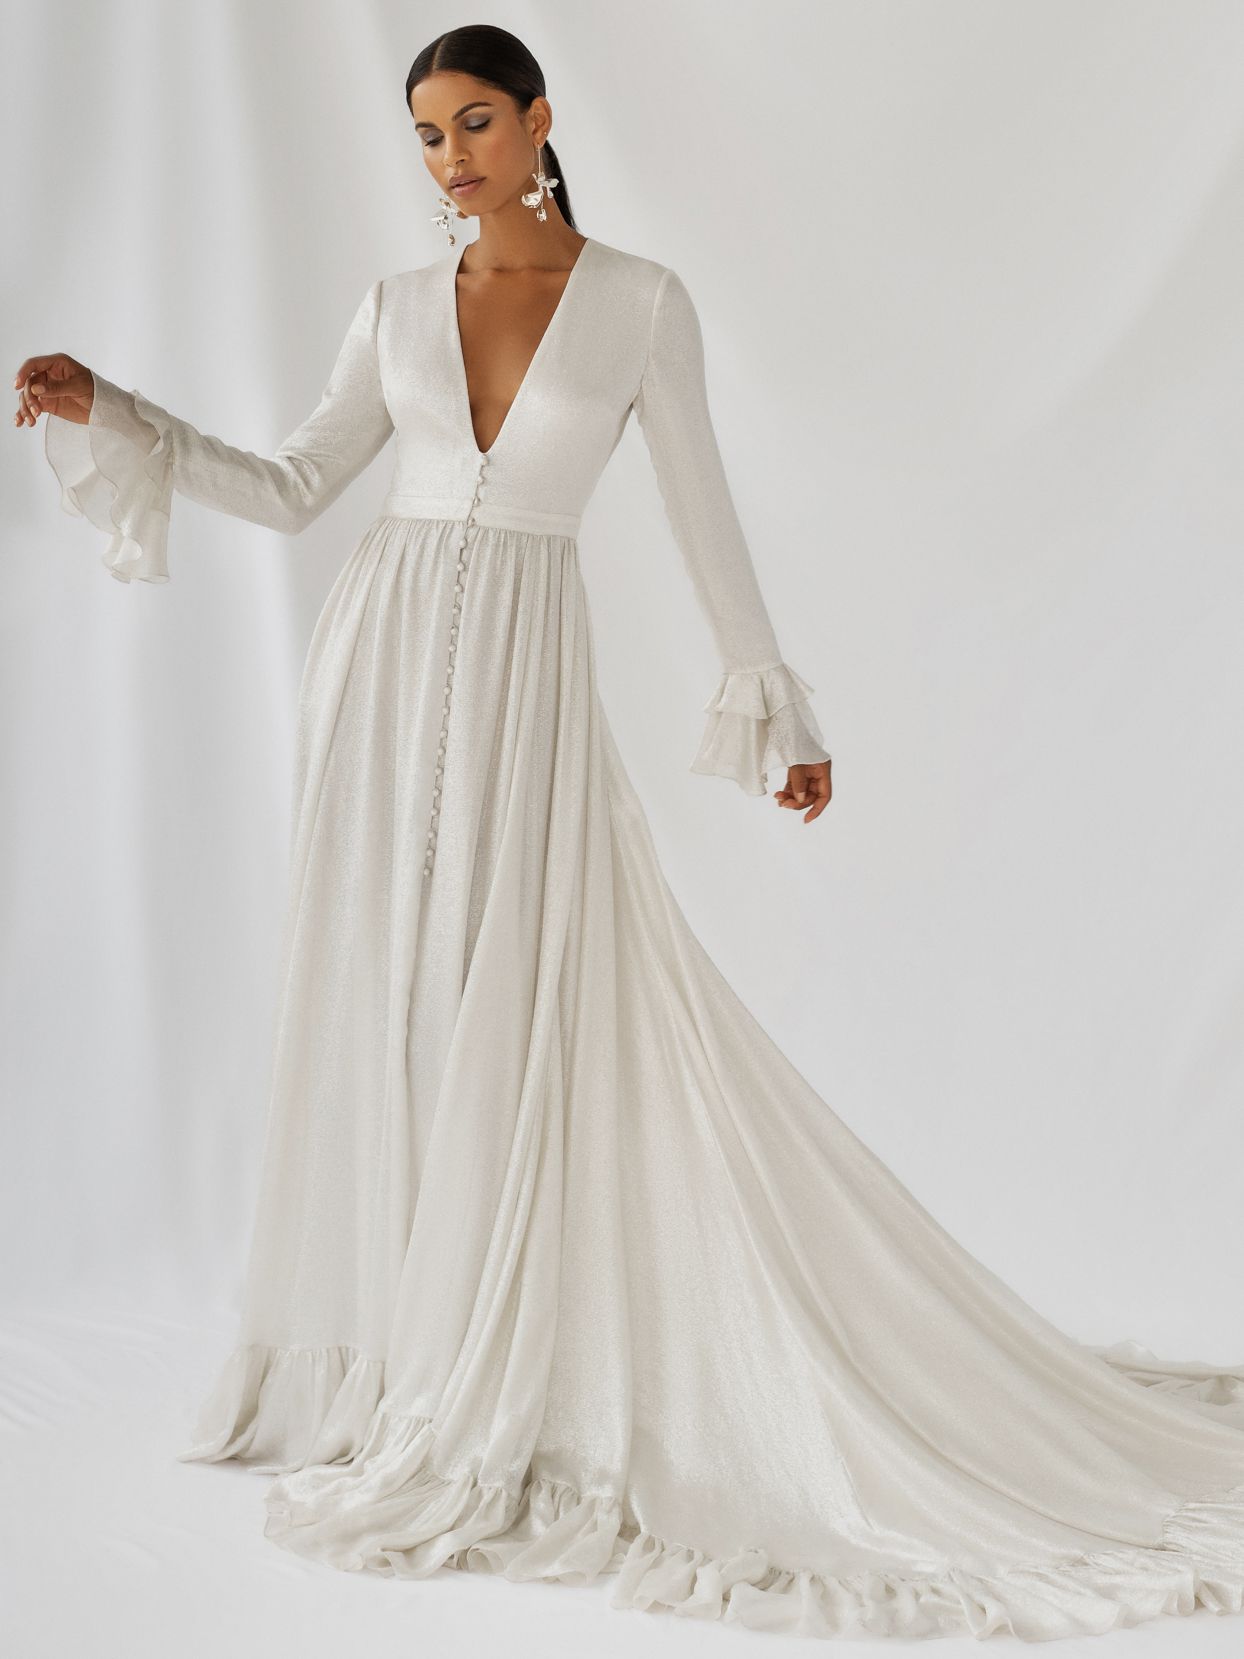 Long Sleeve Dress For Wedding on Sale ...